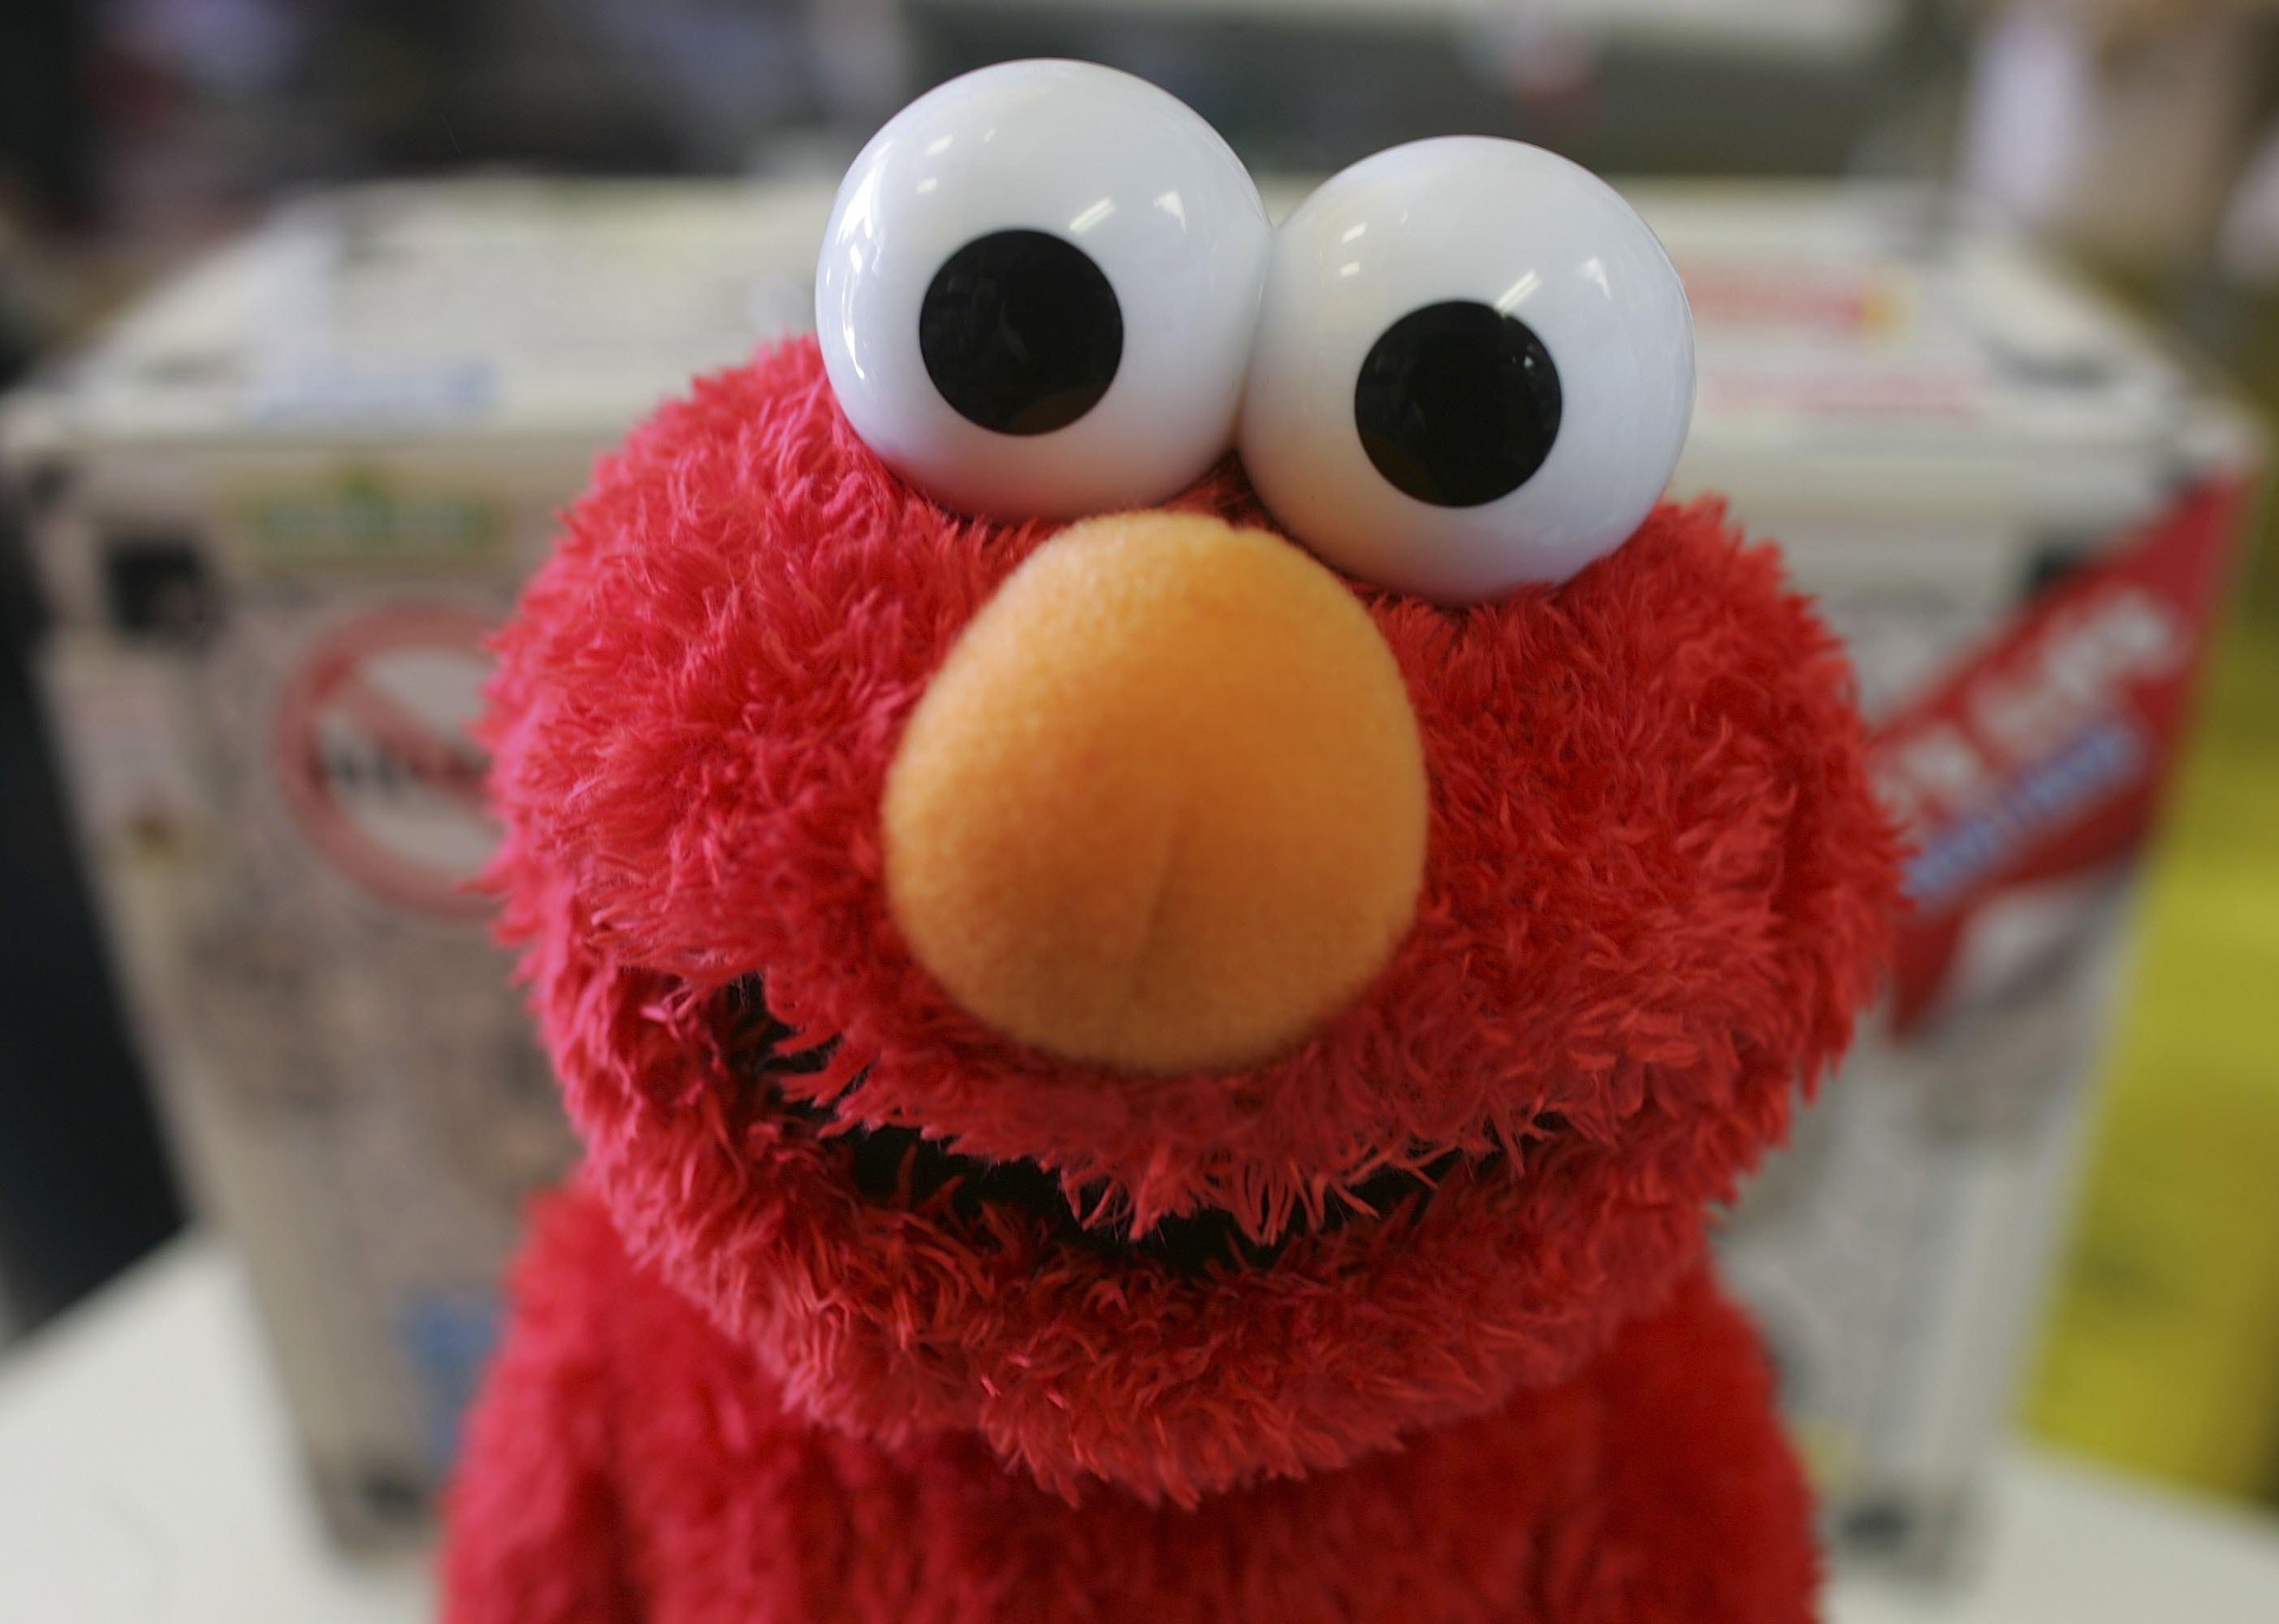 Close-up of Elmo toy.